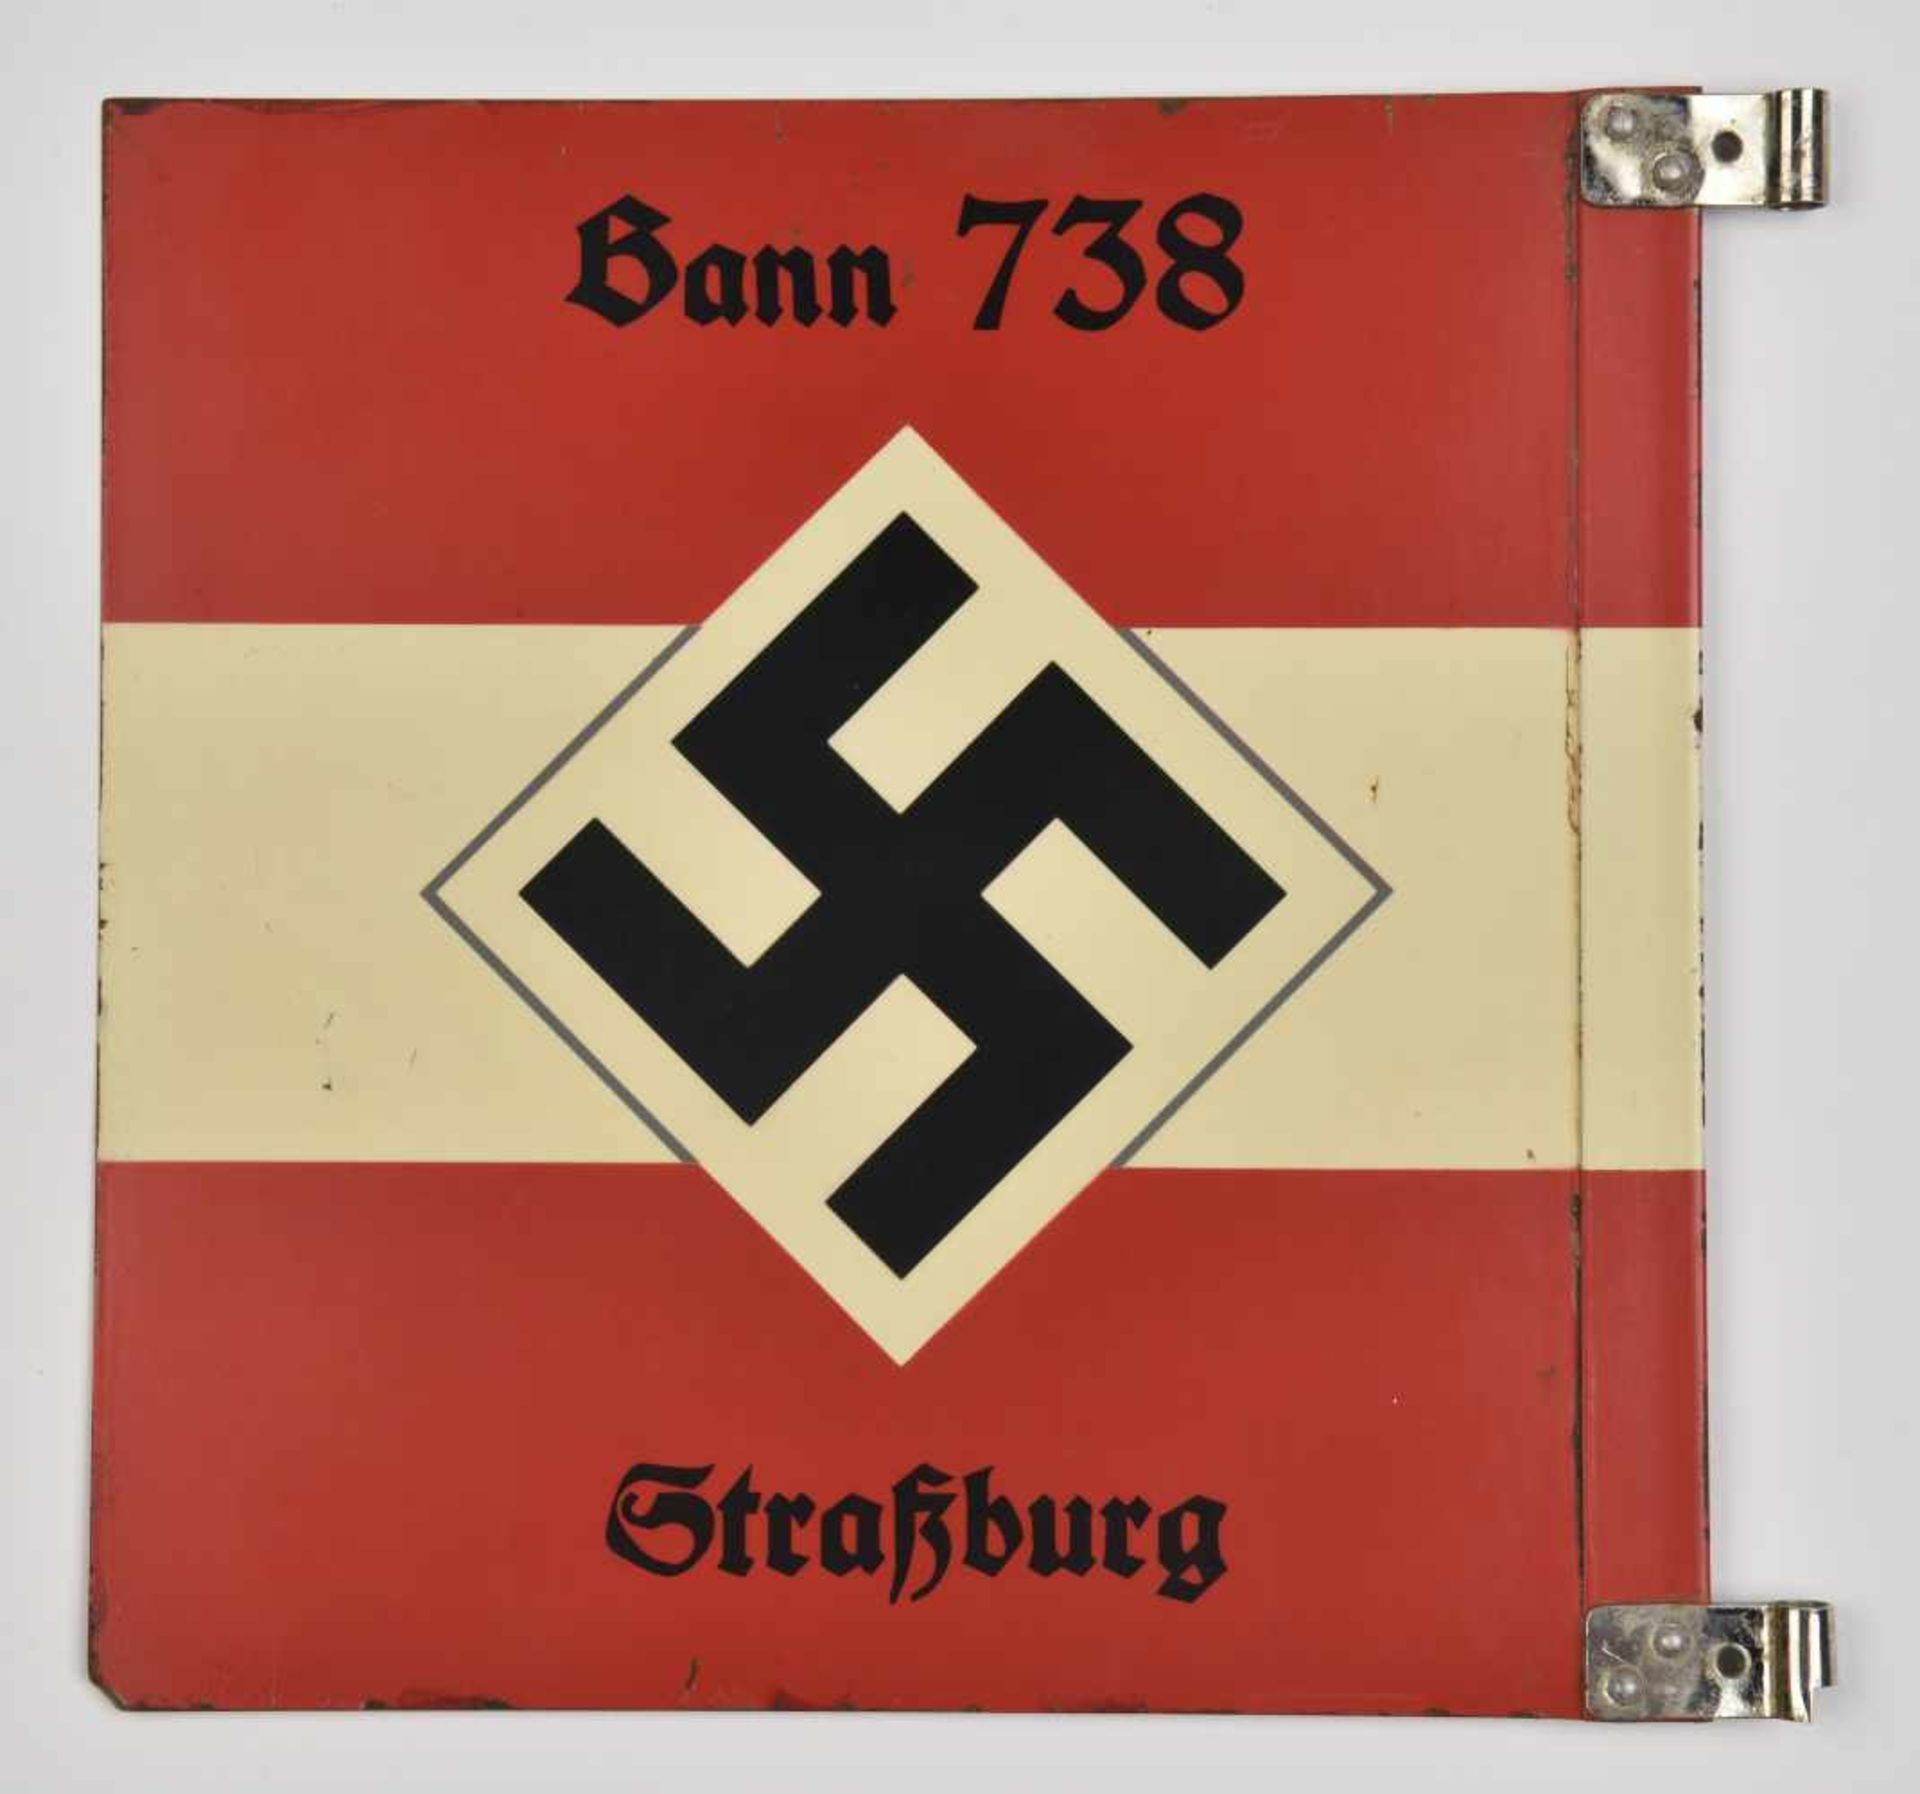 Kraftwagenstander für führer du Bann de Strasbourg.  En métal, de couleur rouge et blanc. Biface, - Image 2 of 2